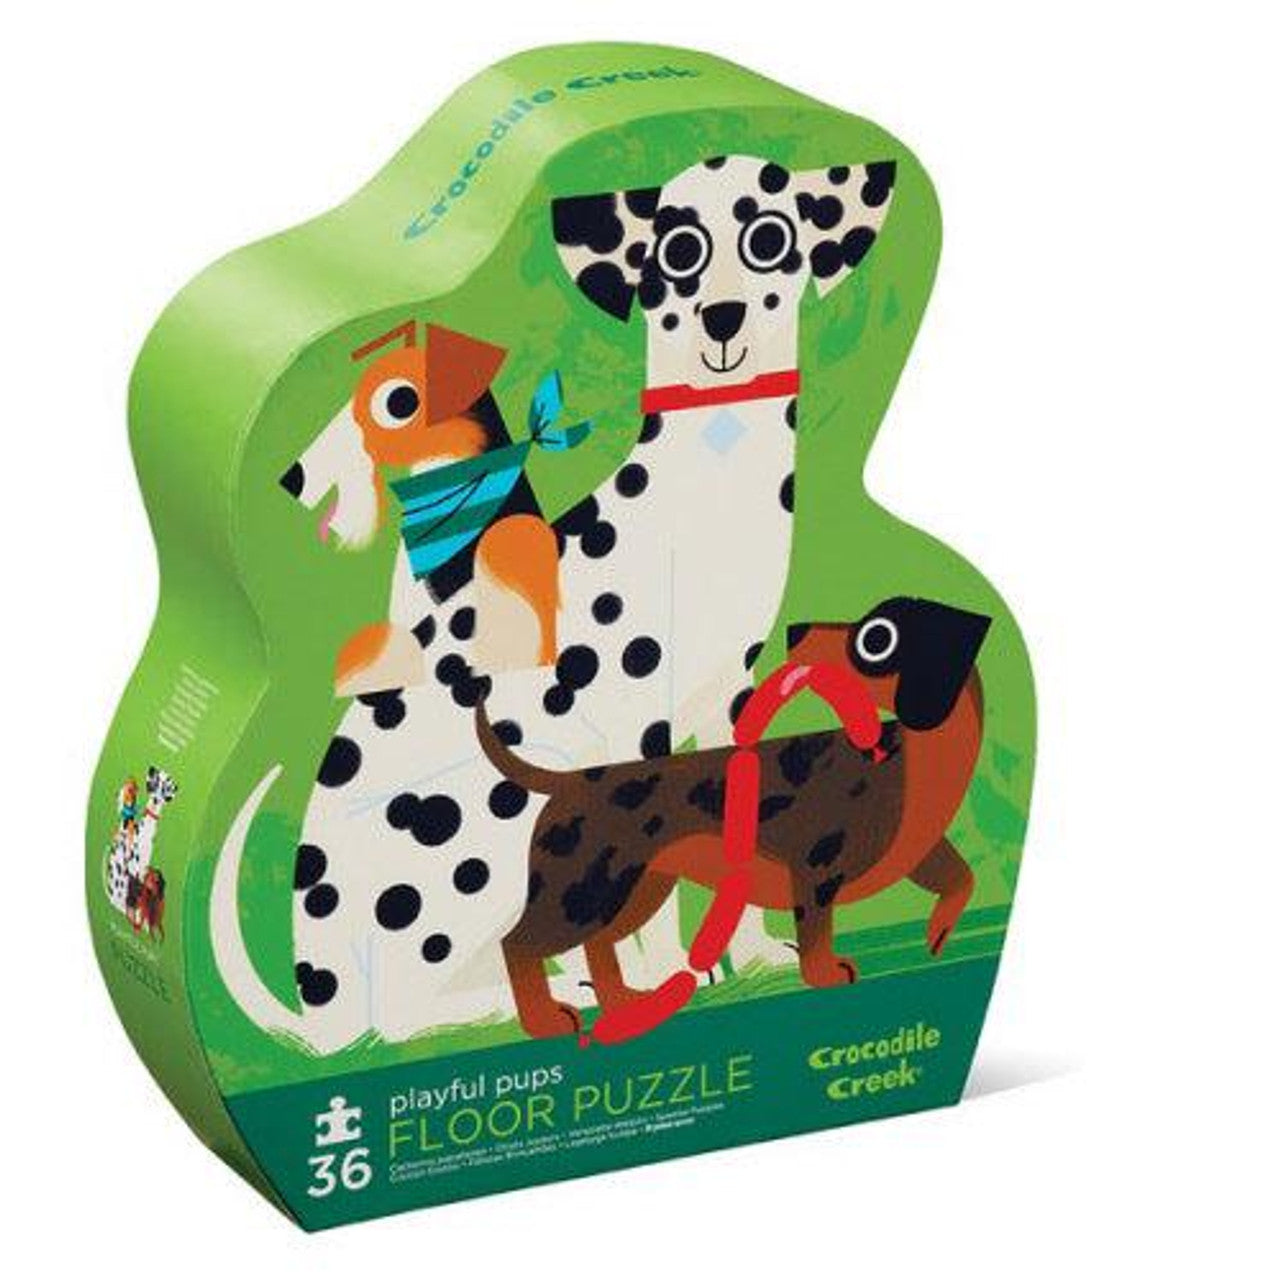 Crocodile Creek 36-pc Puzzle: Playful Pups